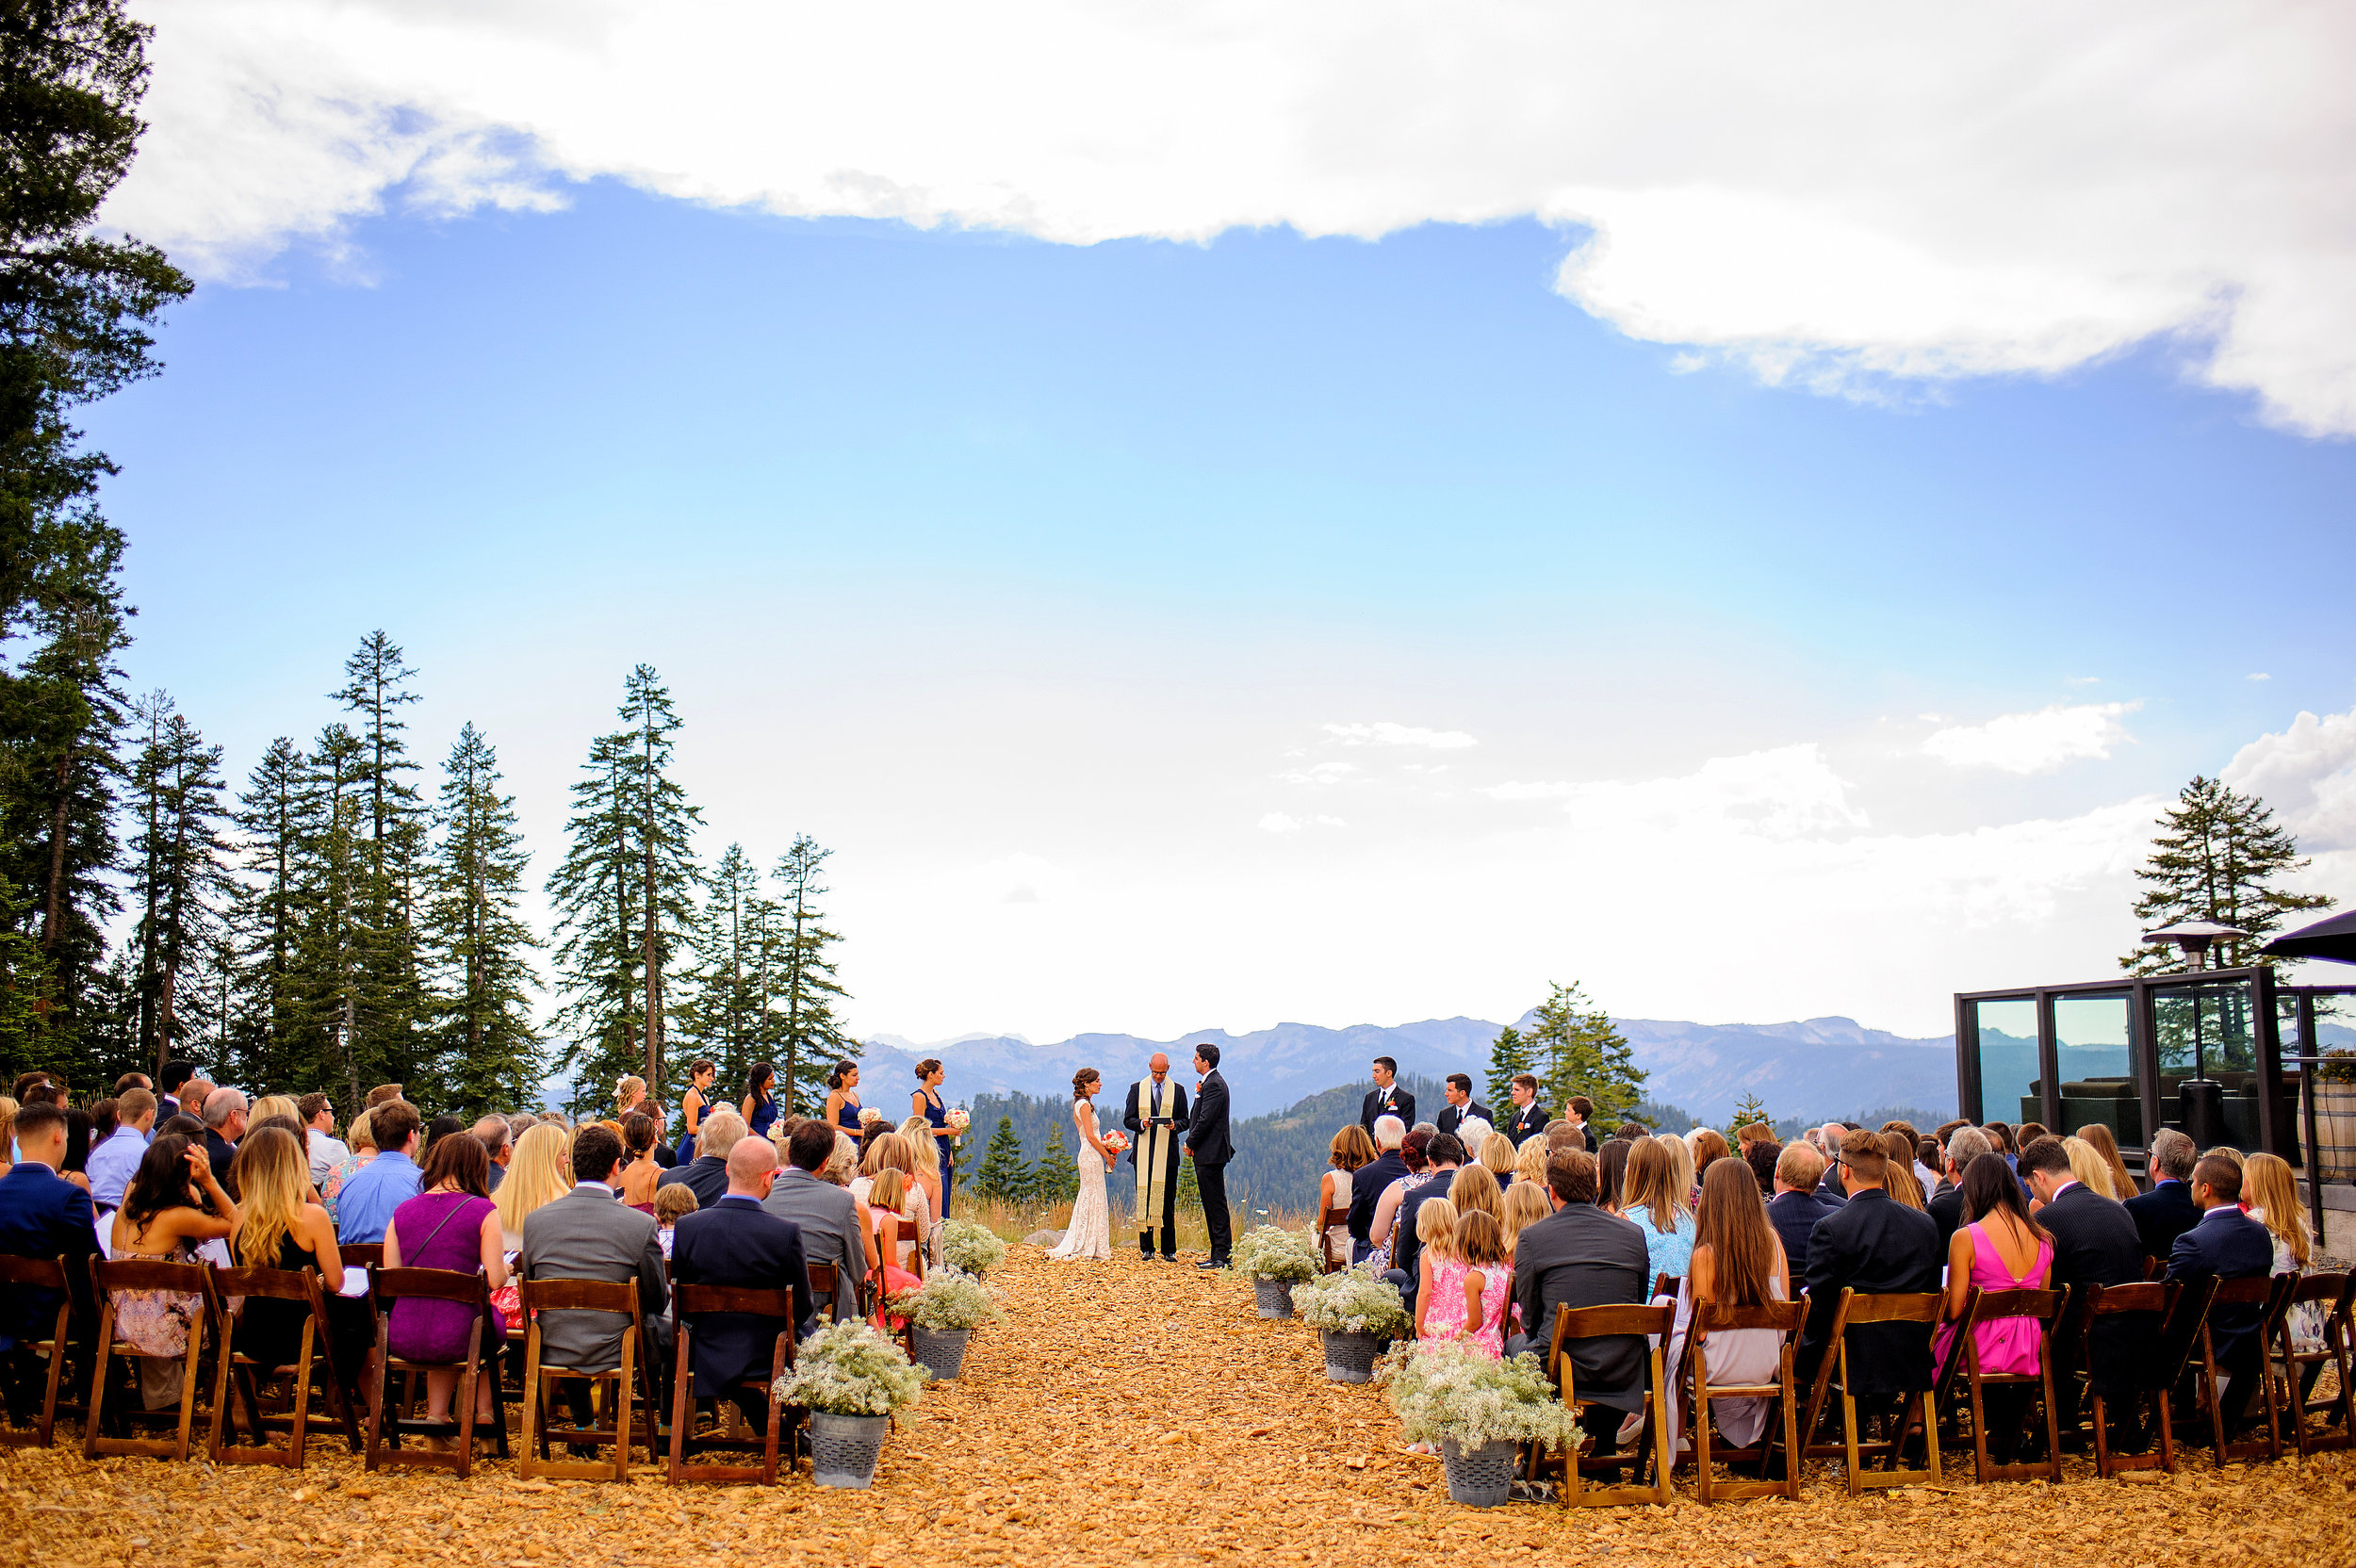  Wedding ceremony at Zephyr Lodge at Northstar California Resort in Truckee California. 